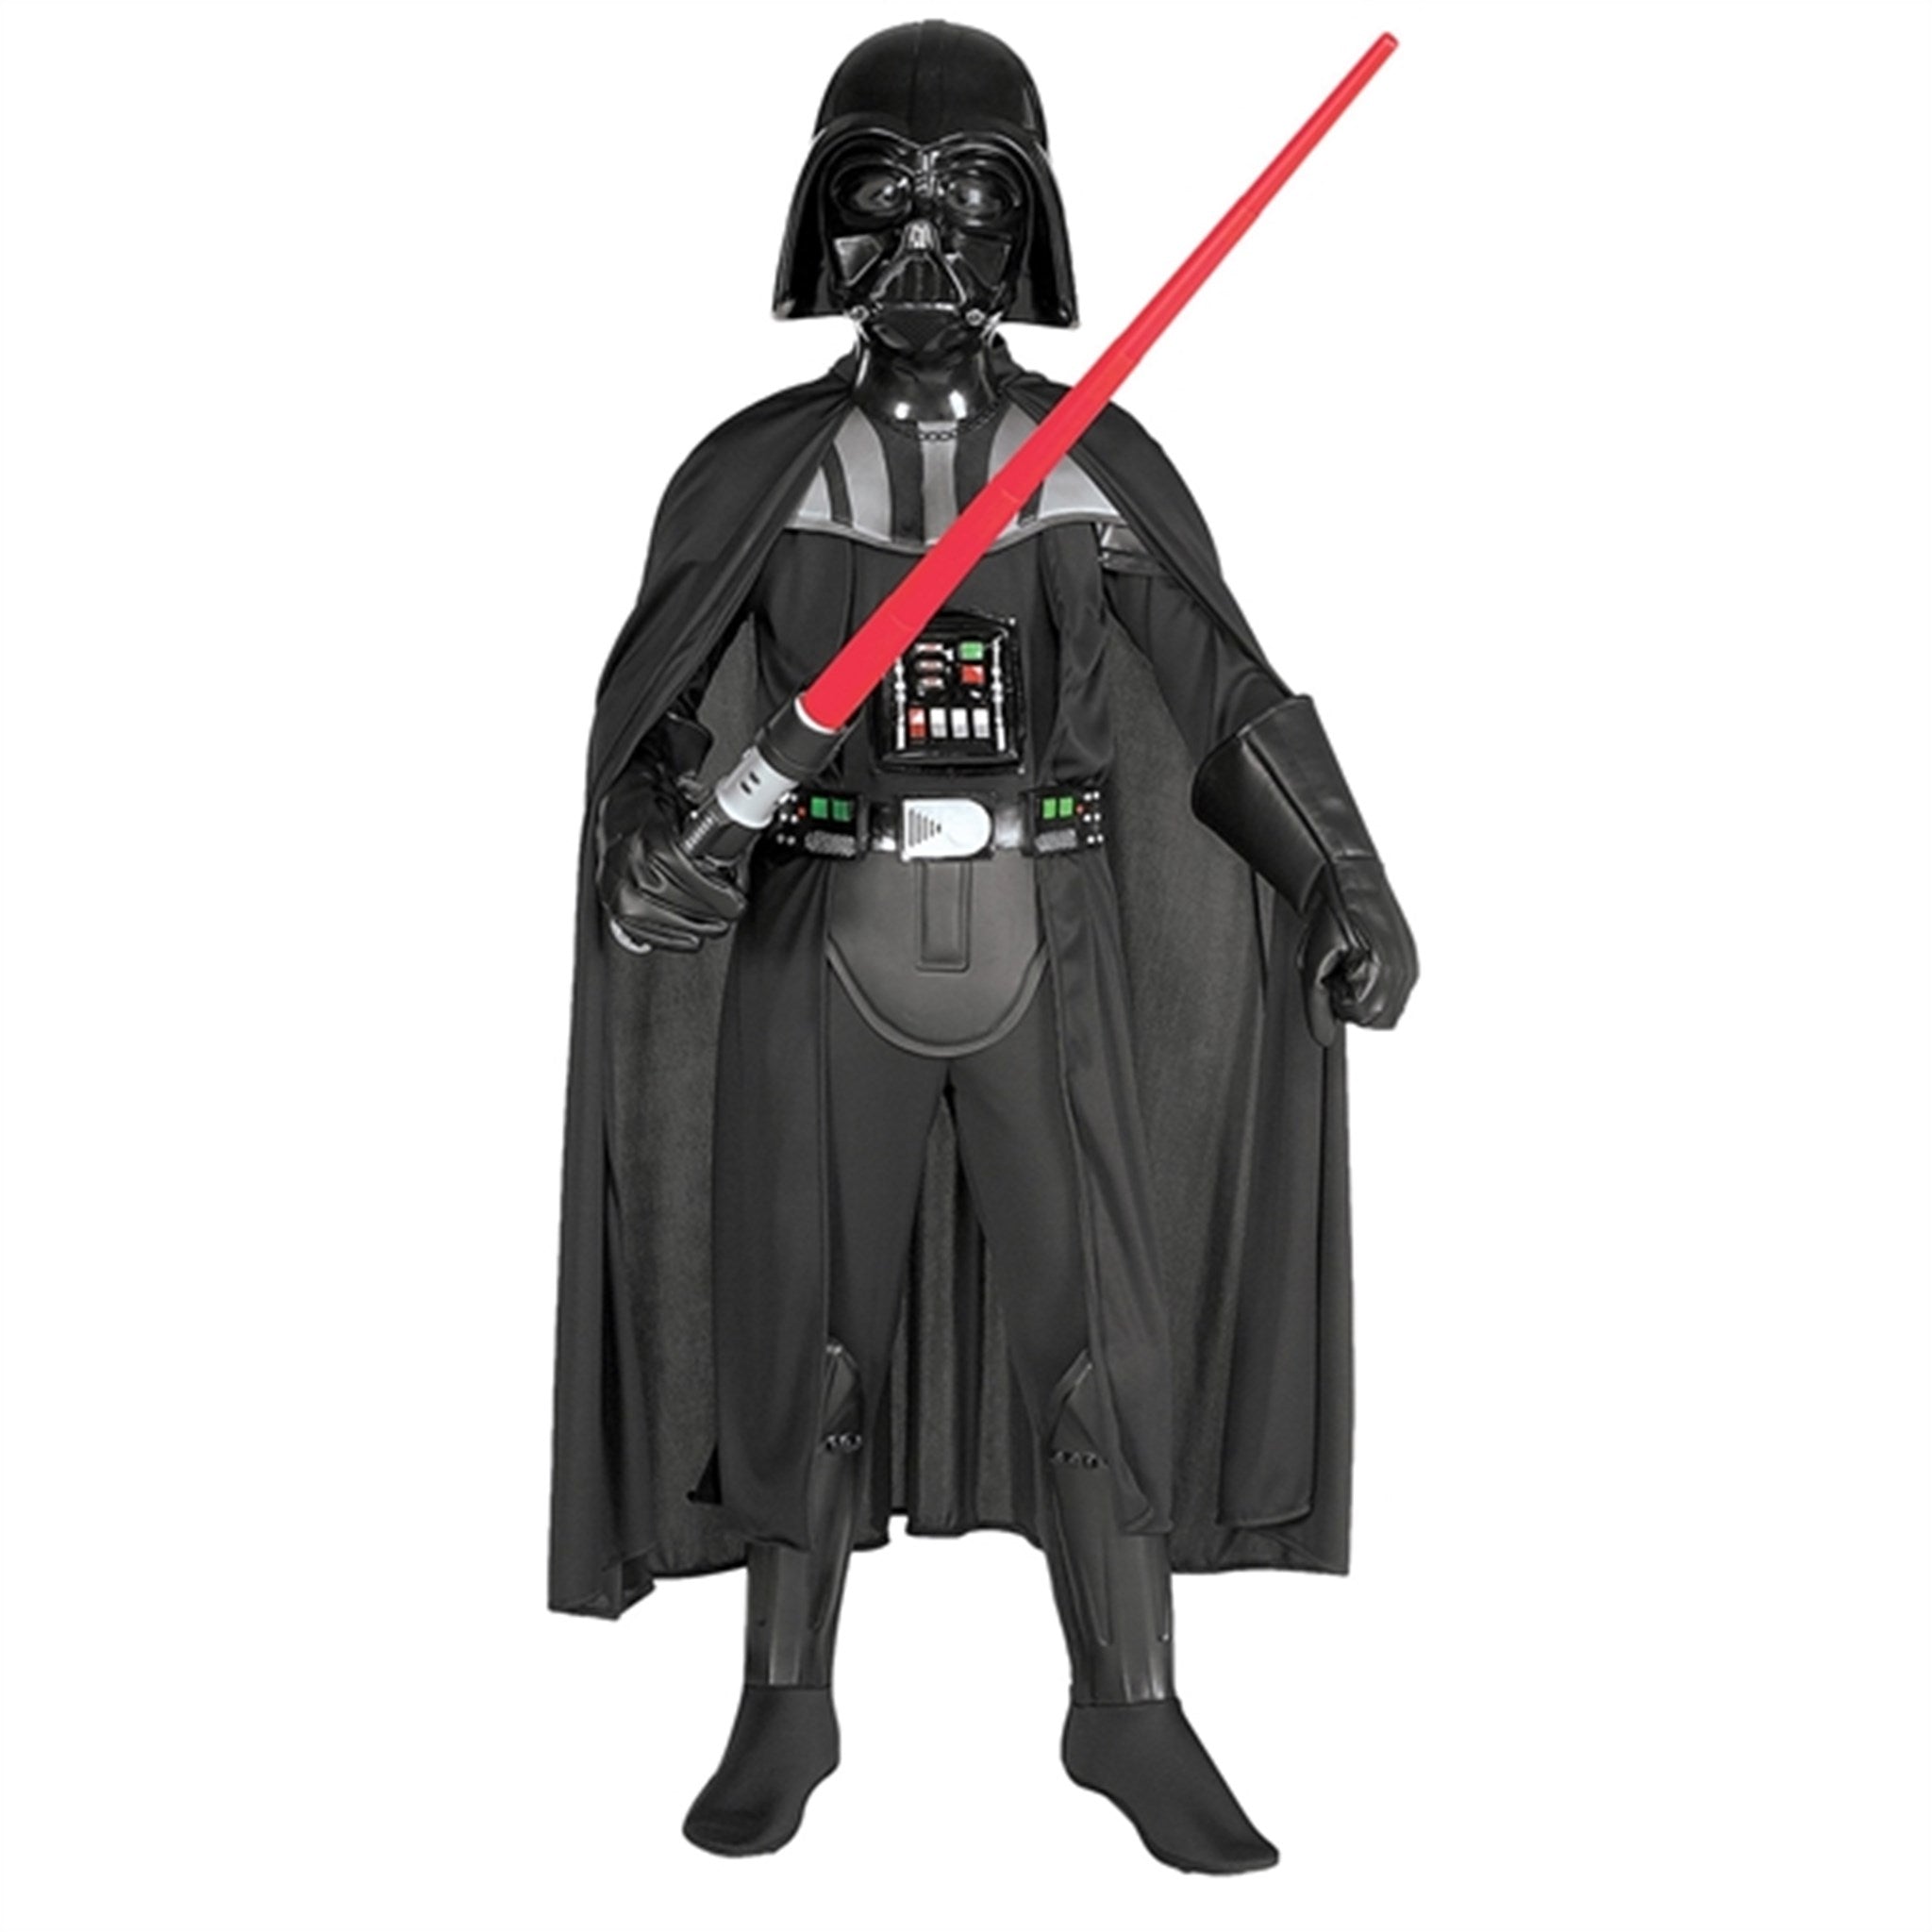 Rubies Star Wars Darth Vader Costume